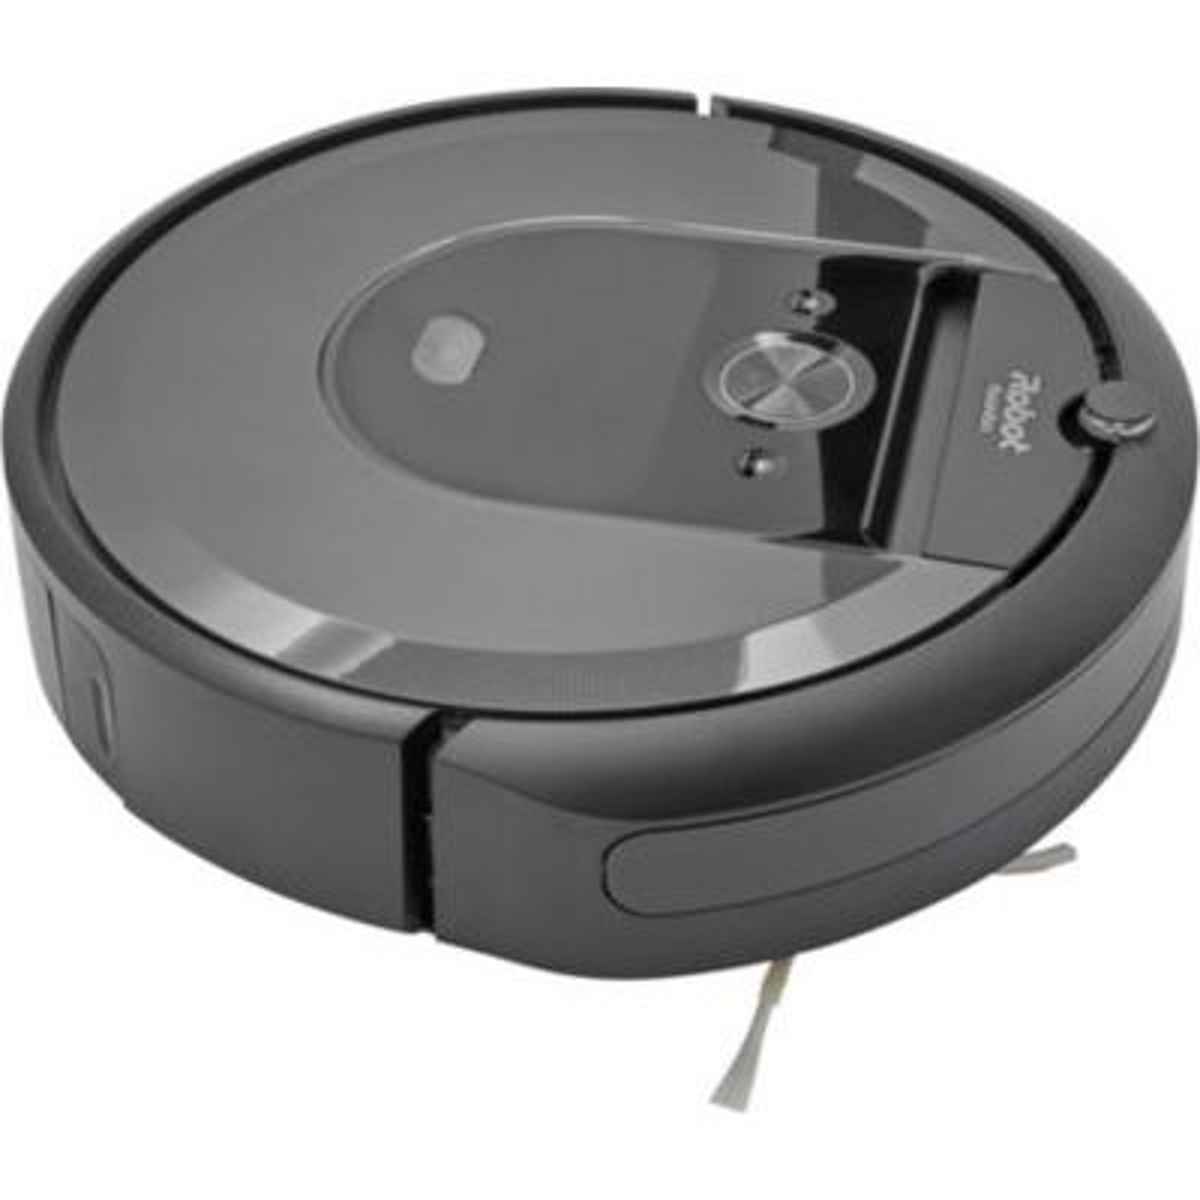 Roomba i7 robot vacuum cleaner